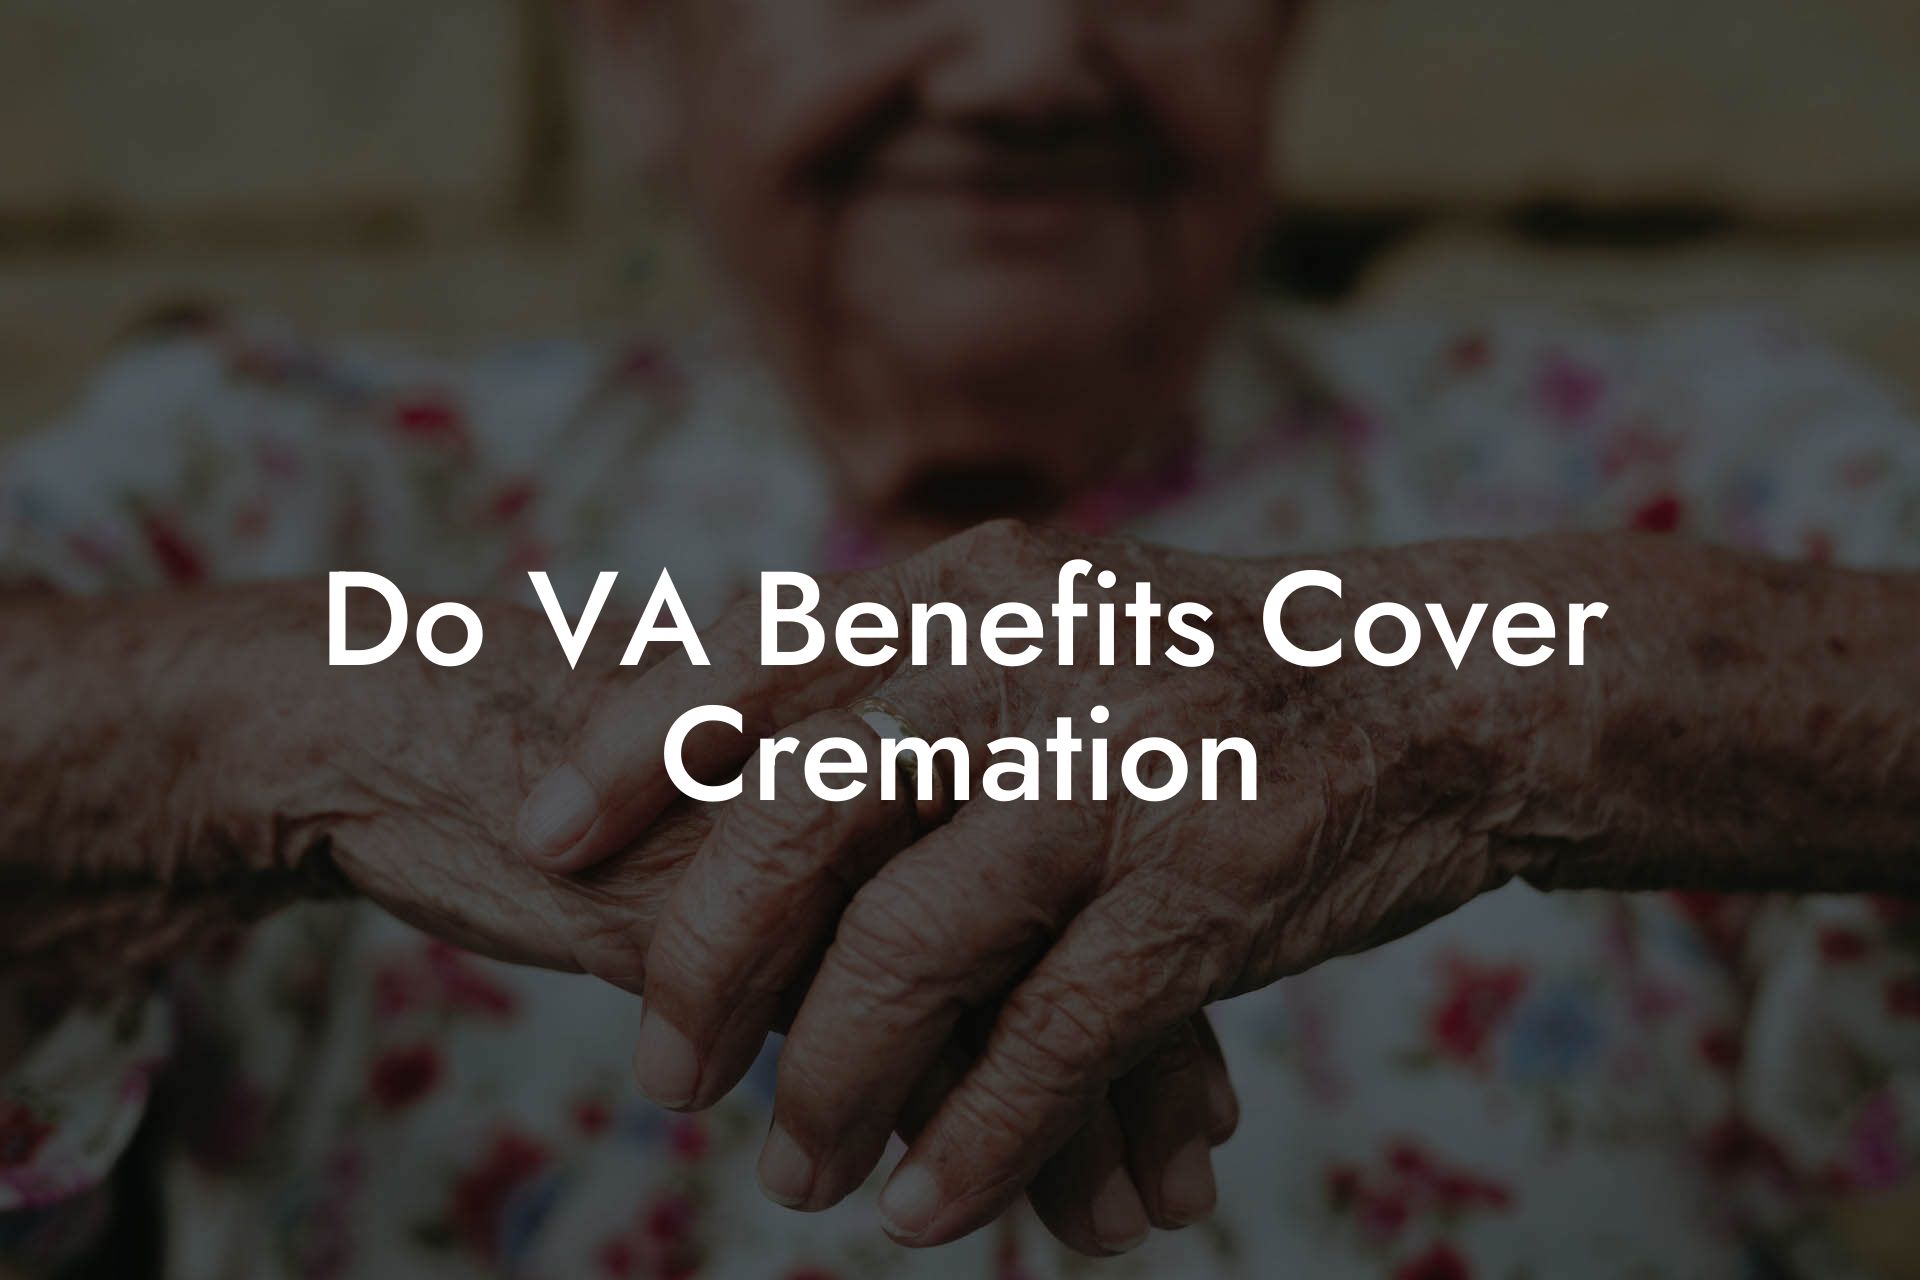 Do VA Benefits Cover Cremation